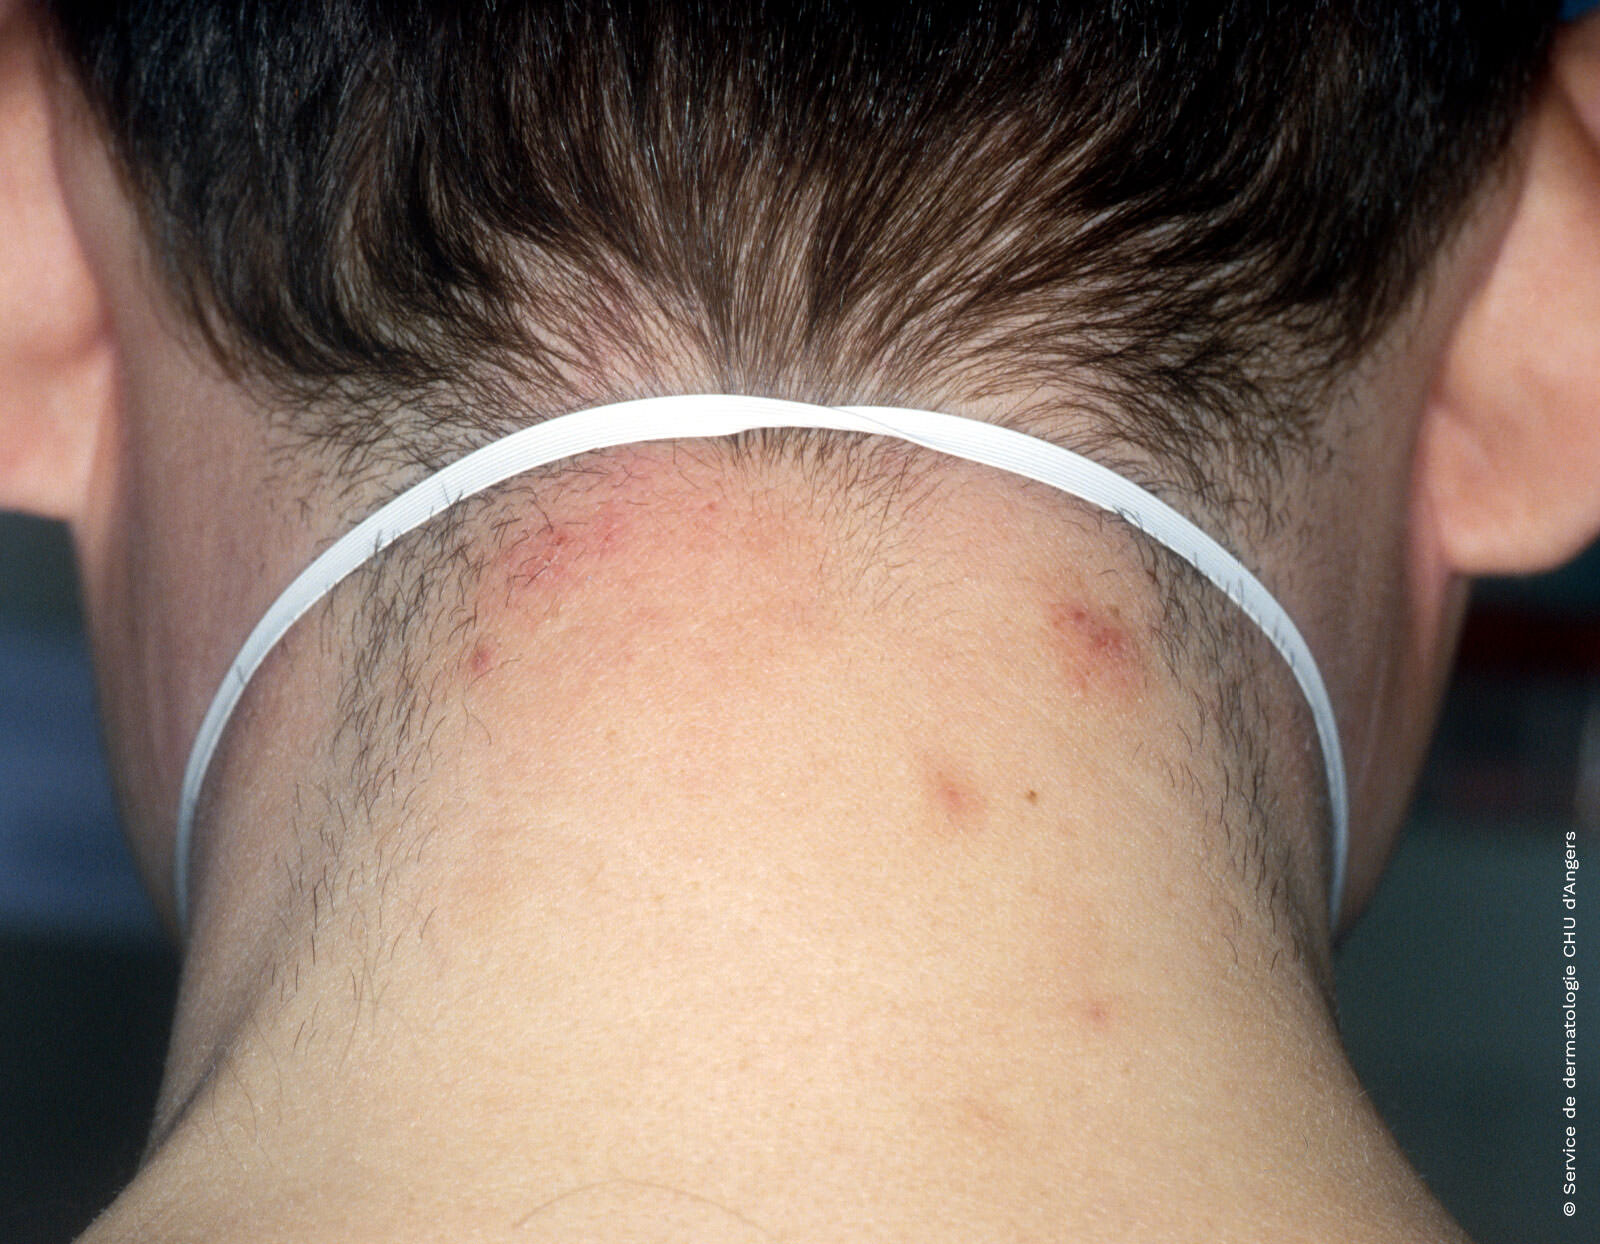 eczema on back of neck